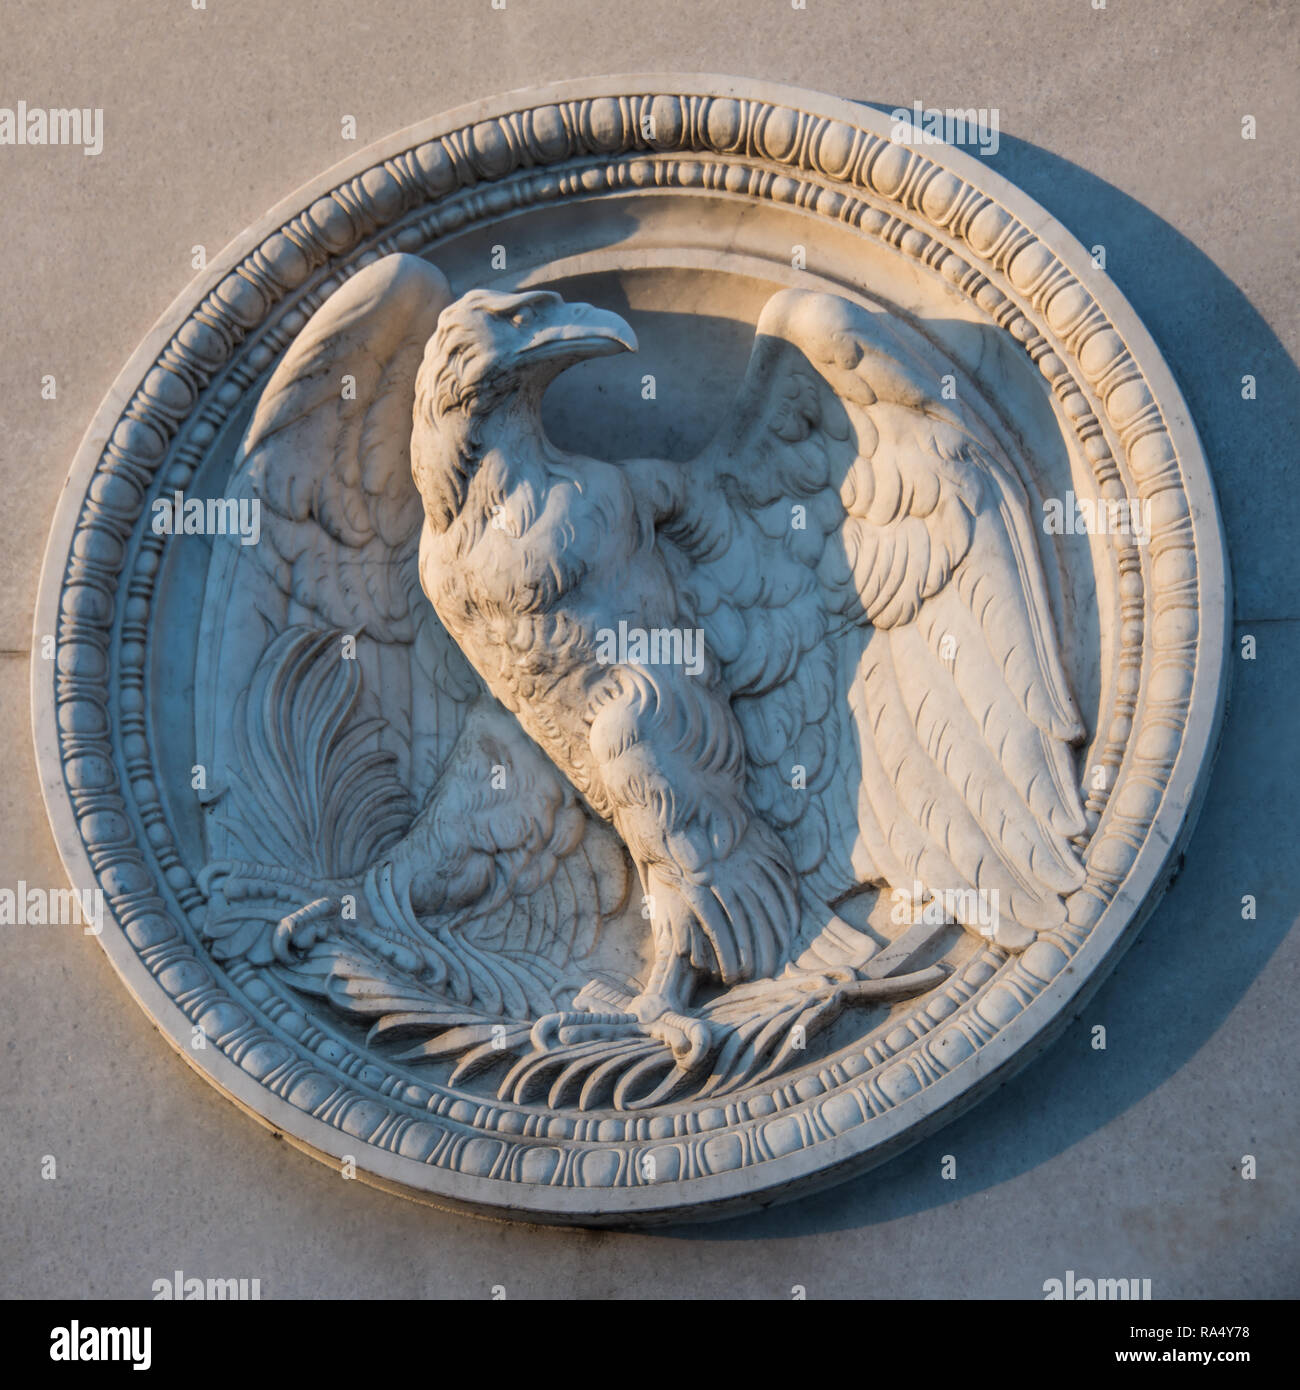 German Eagle stone emblem Stock Photo